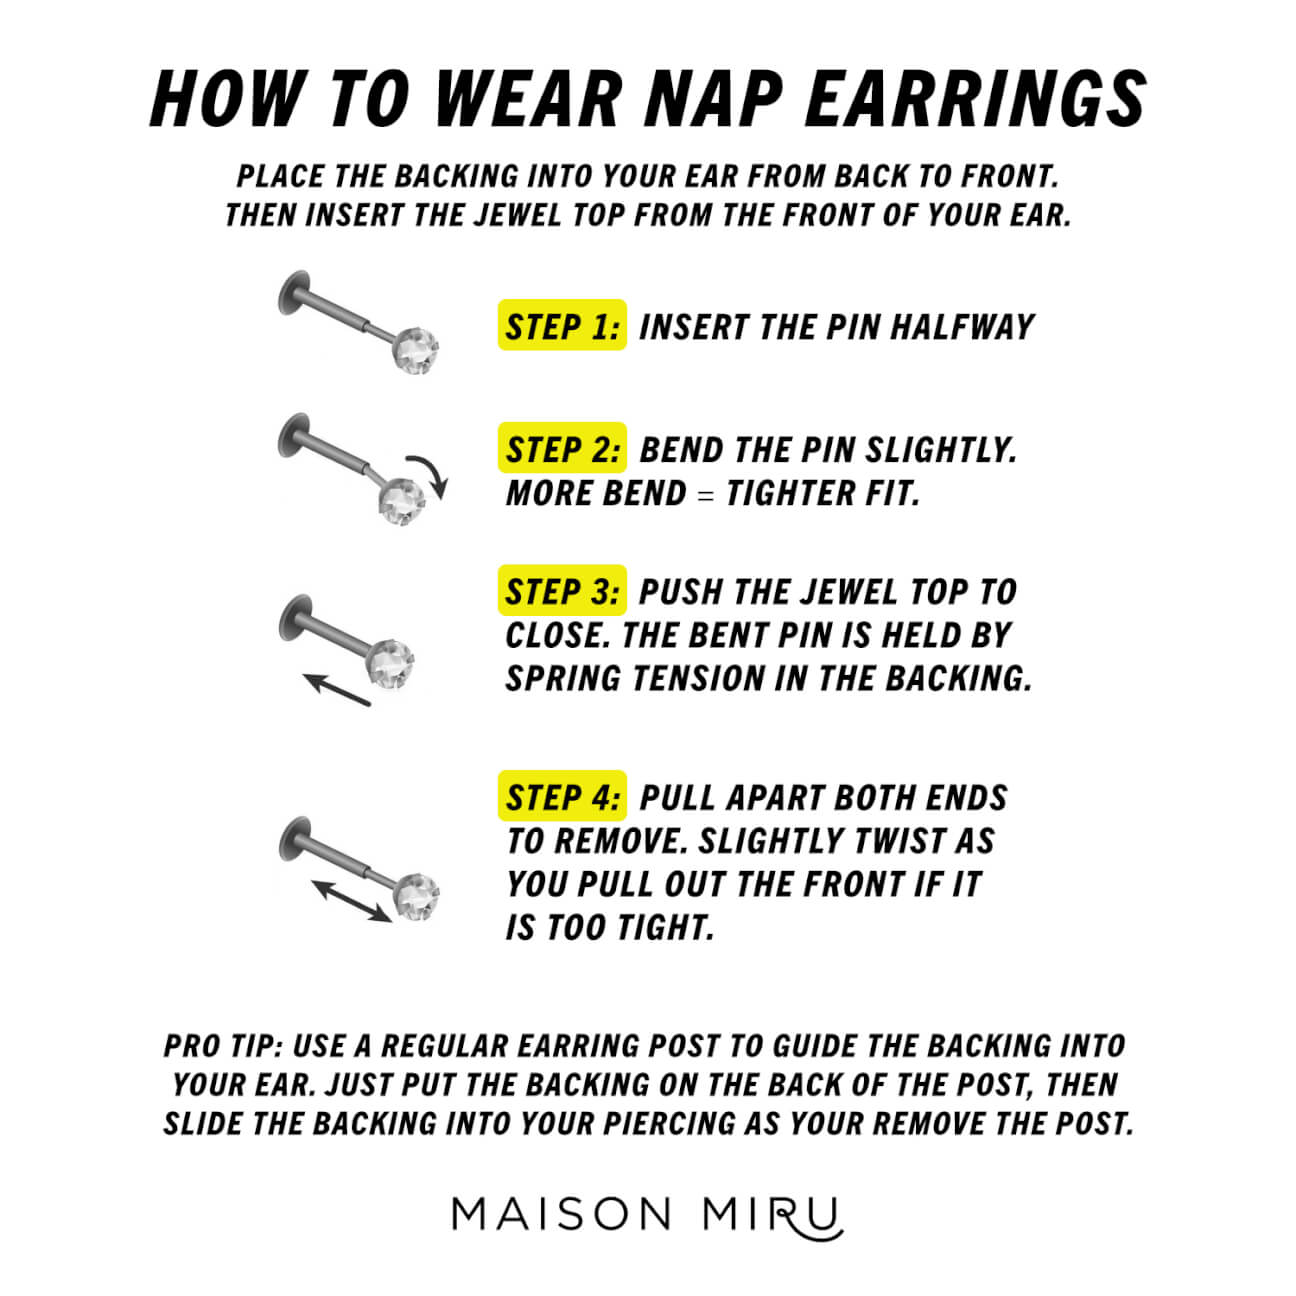 How to Wear the Little Bar Nap Earrings